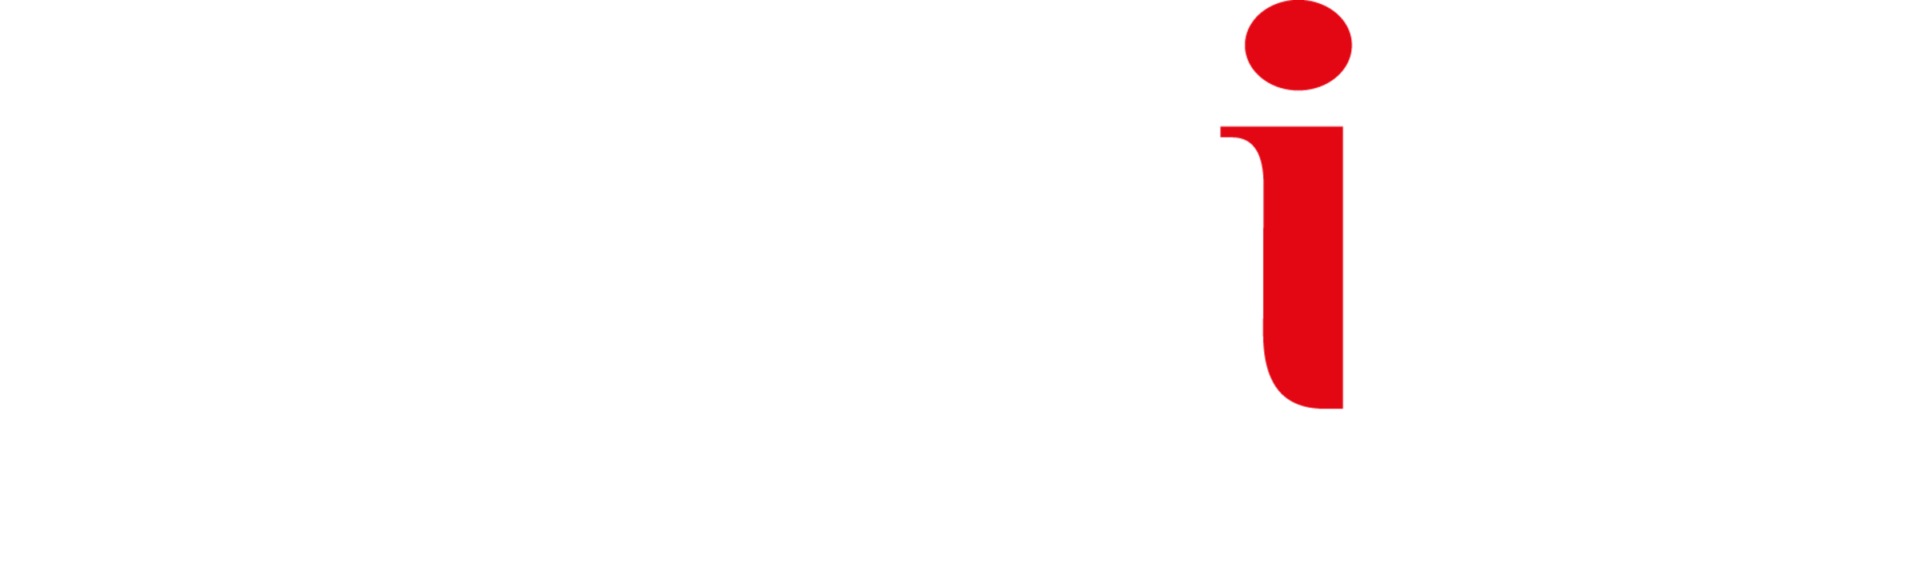 Schmidt лого. Шмидт лого. Shmidt logo. Schmidt logo.